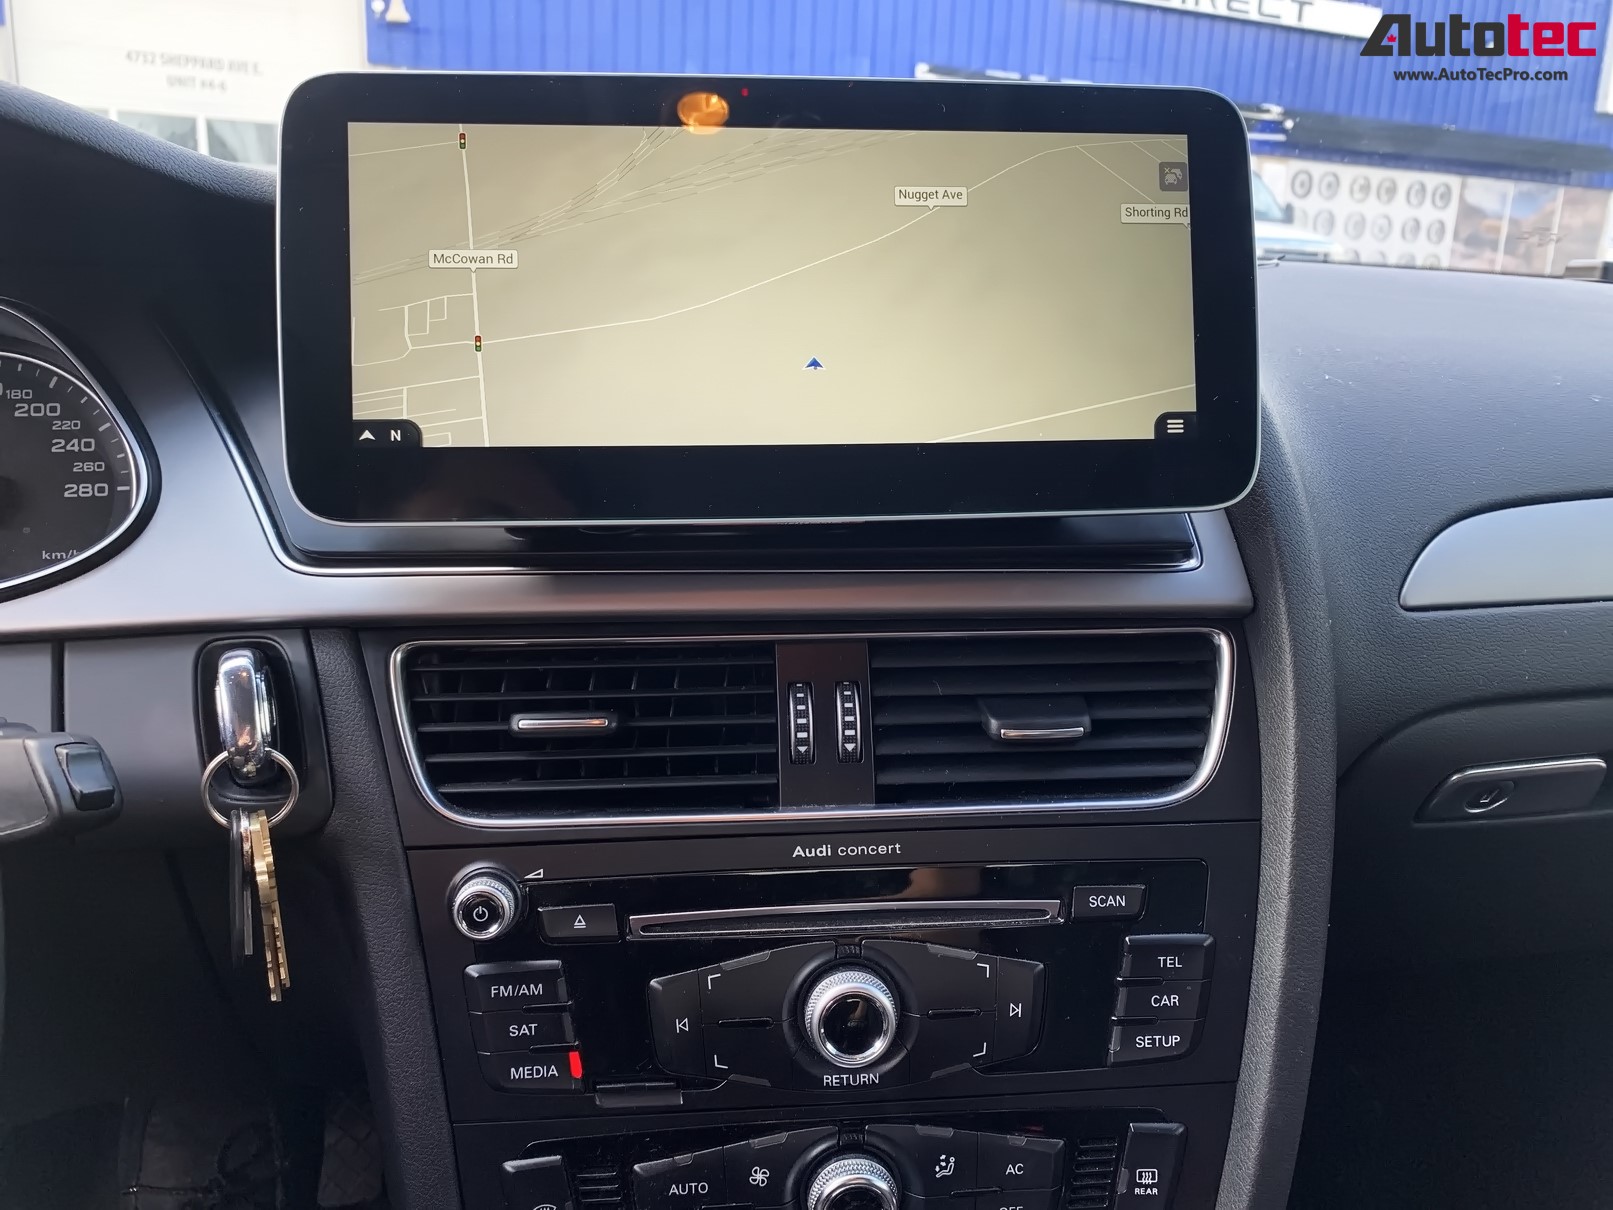 Audi radio